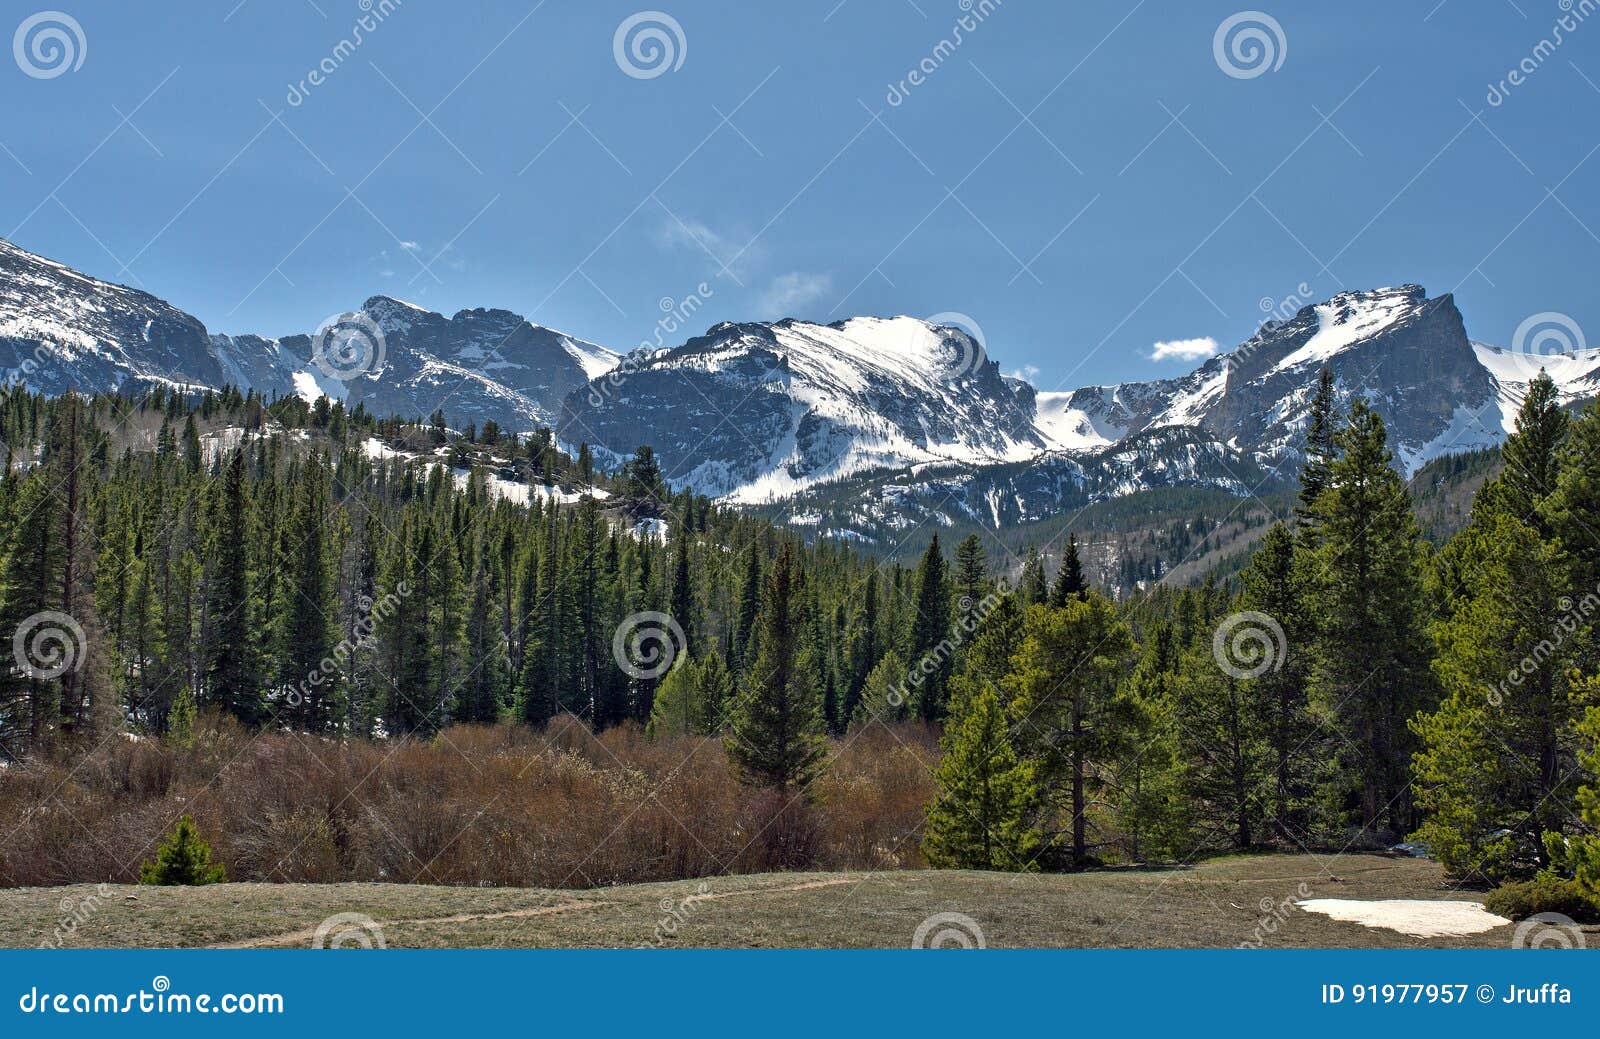 rocky mountain national park vista